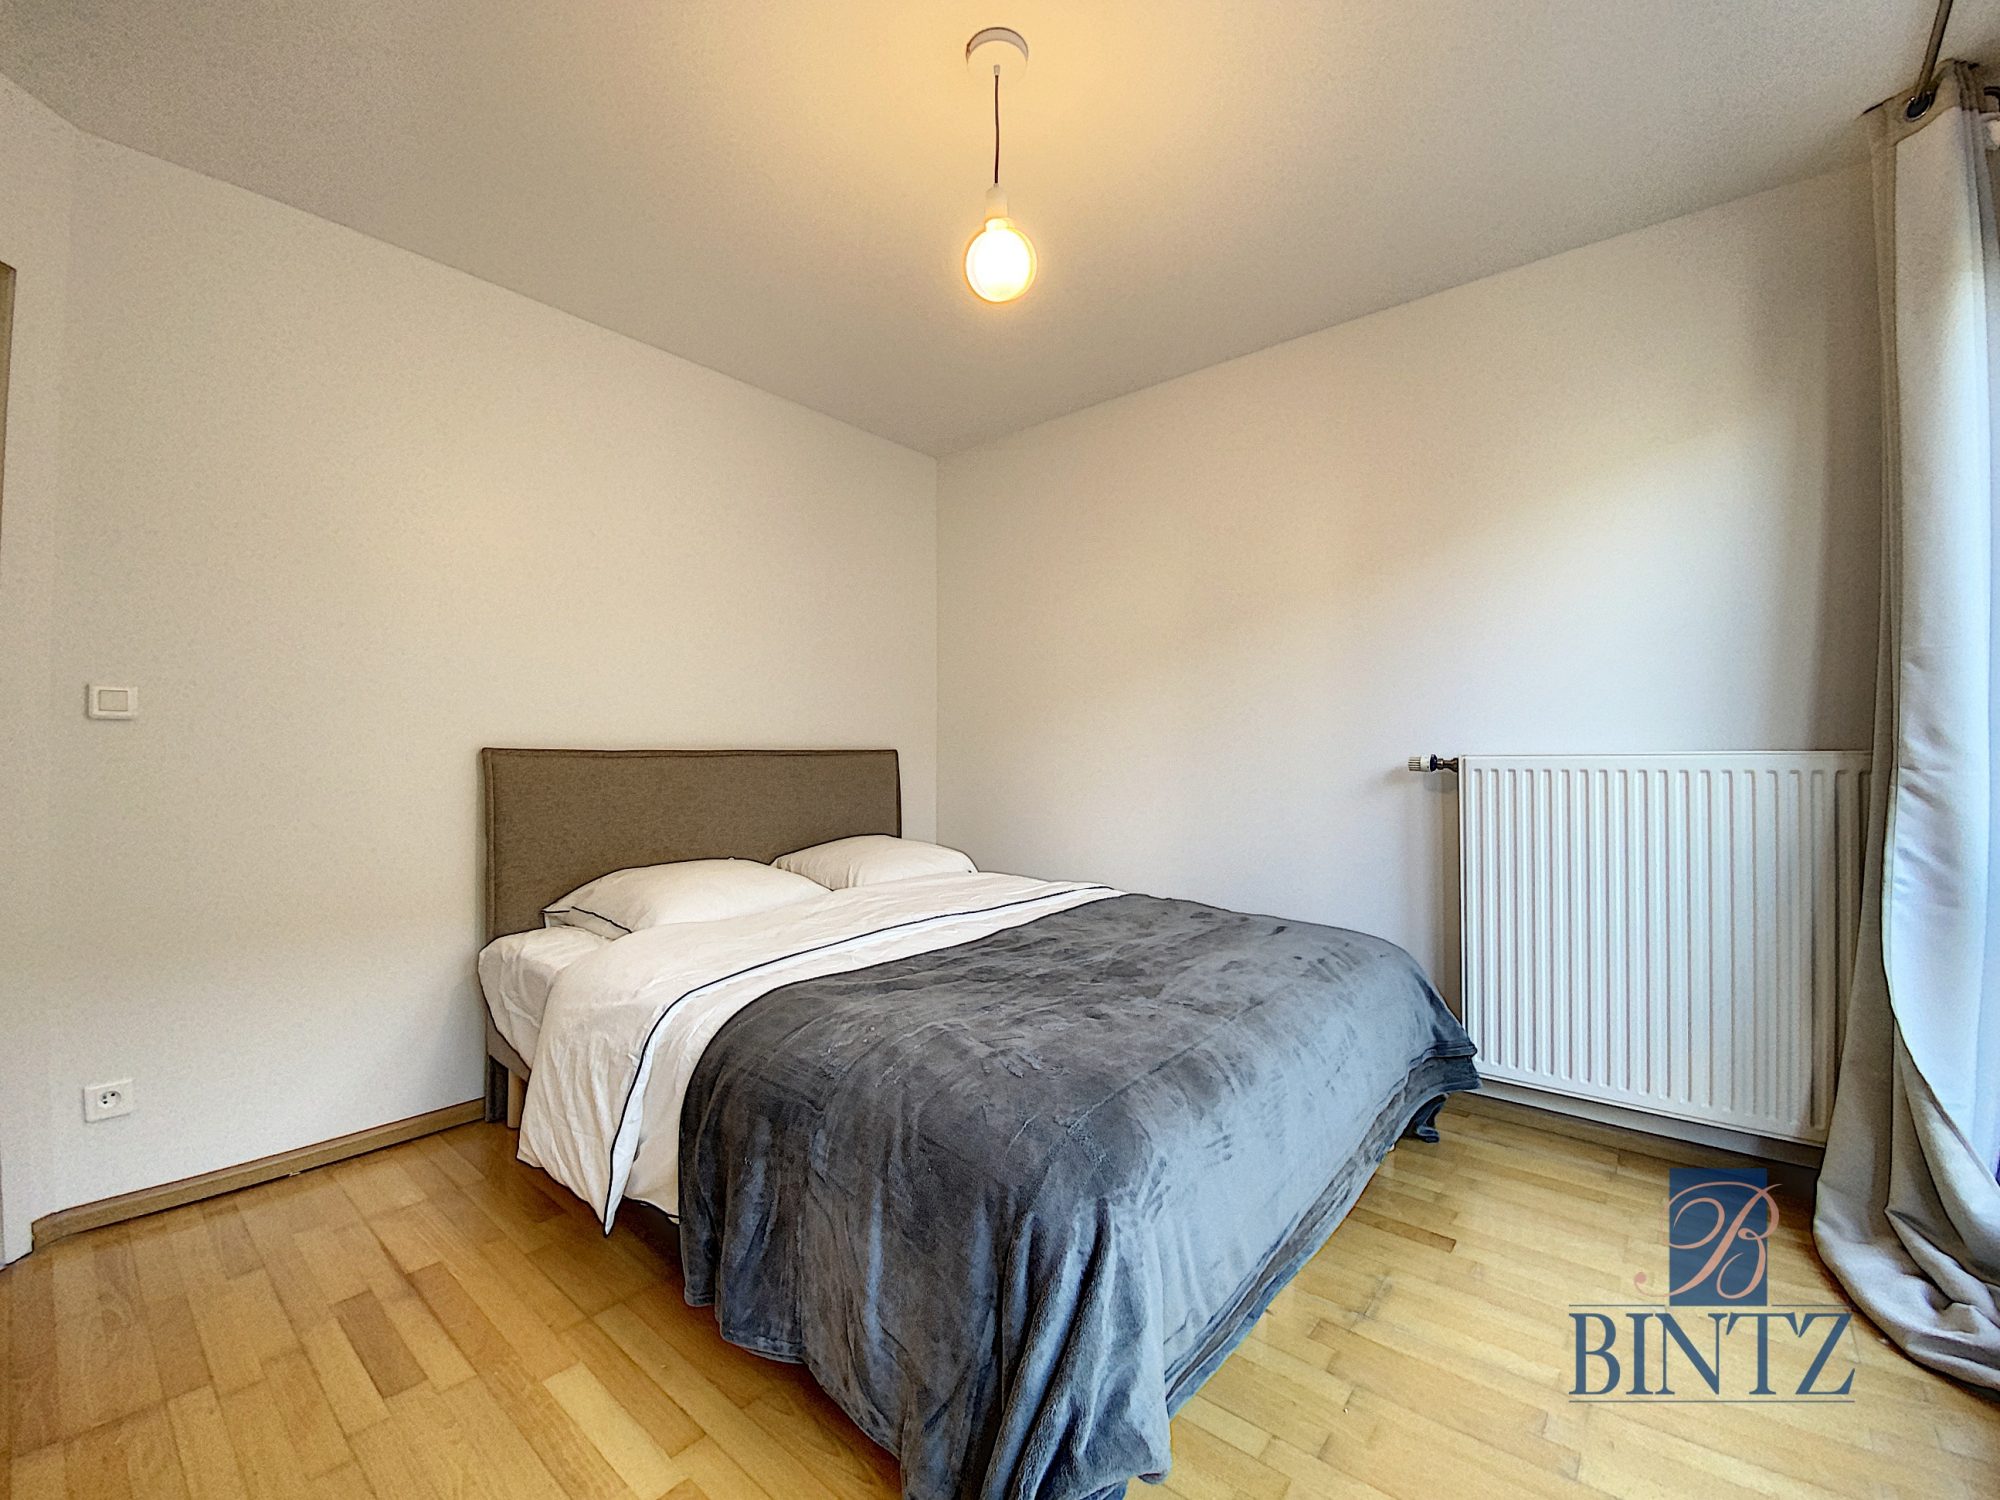 4 PIECE MEUBLE HYPERCENTRE - location appartement Strasbourg - Bintz Immobilier - 15